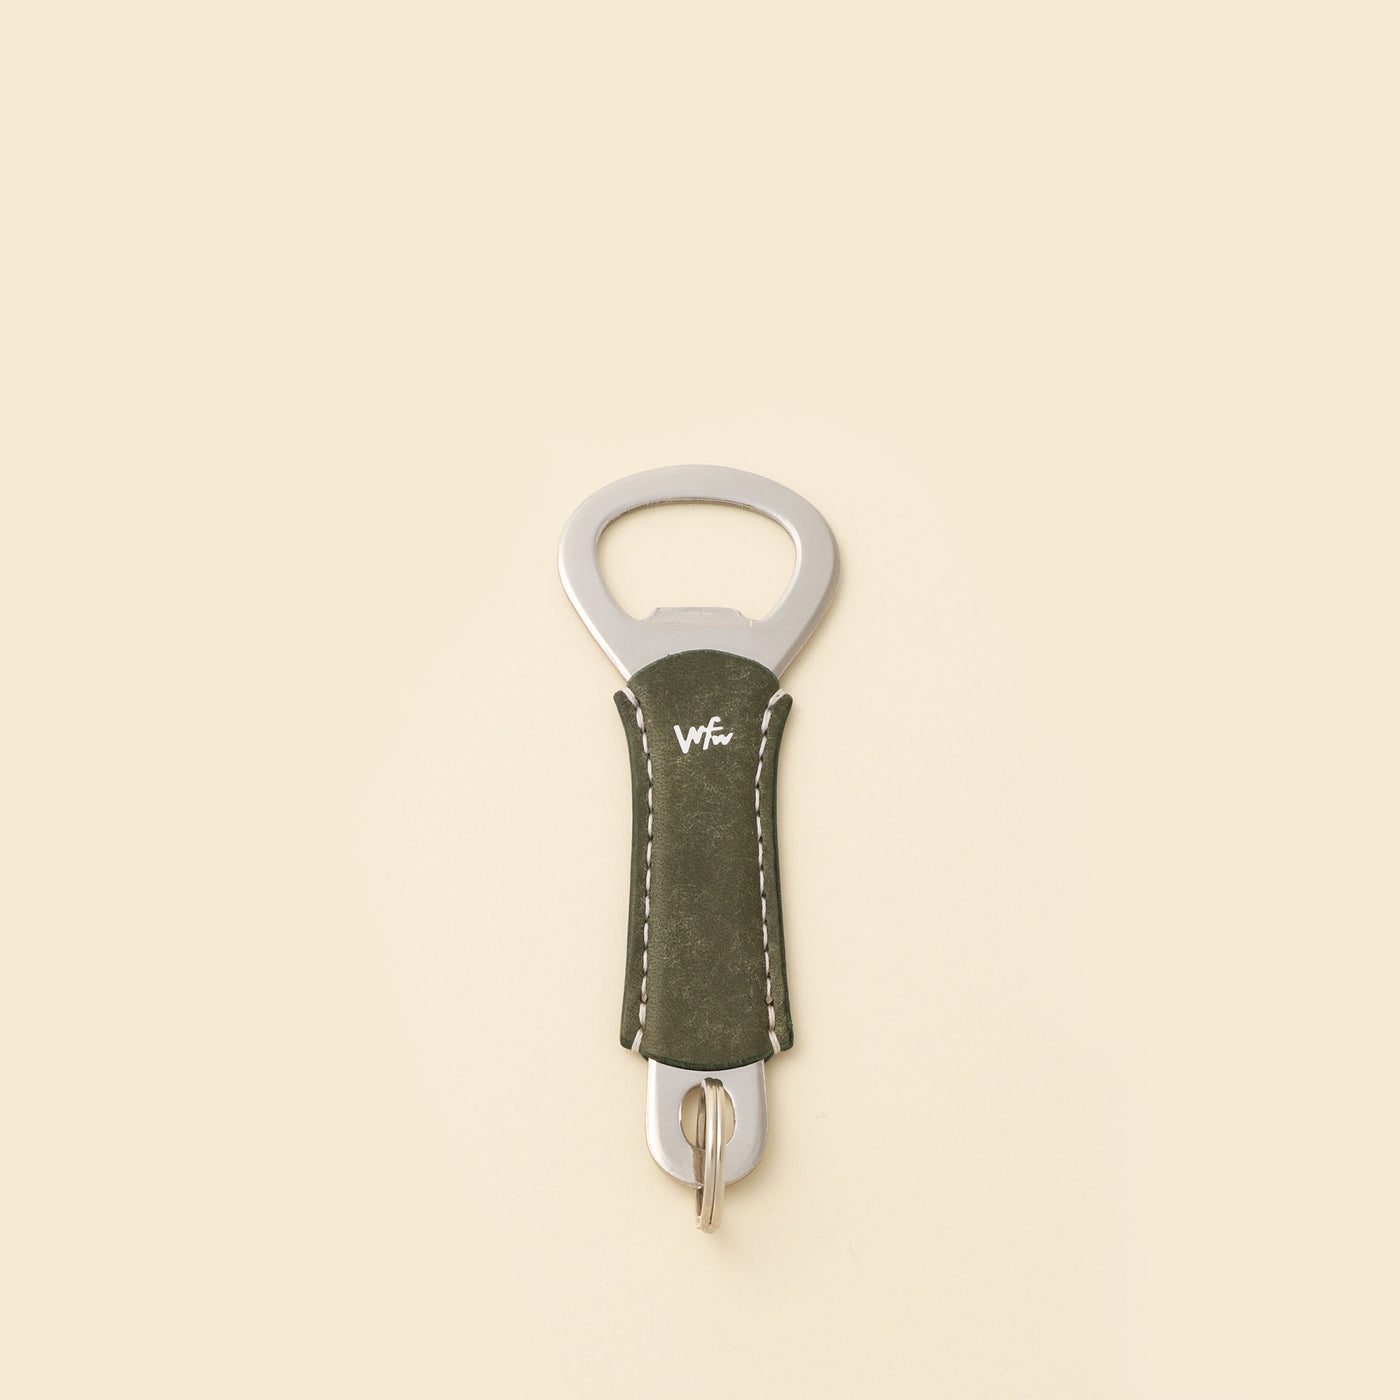 <Mojakawa> Bottle opener key ring / orange